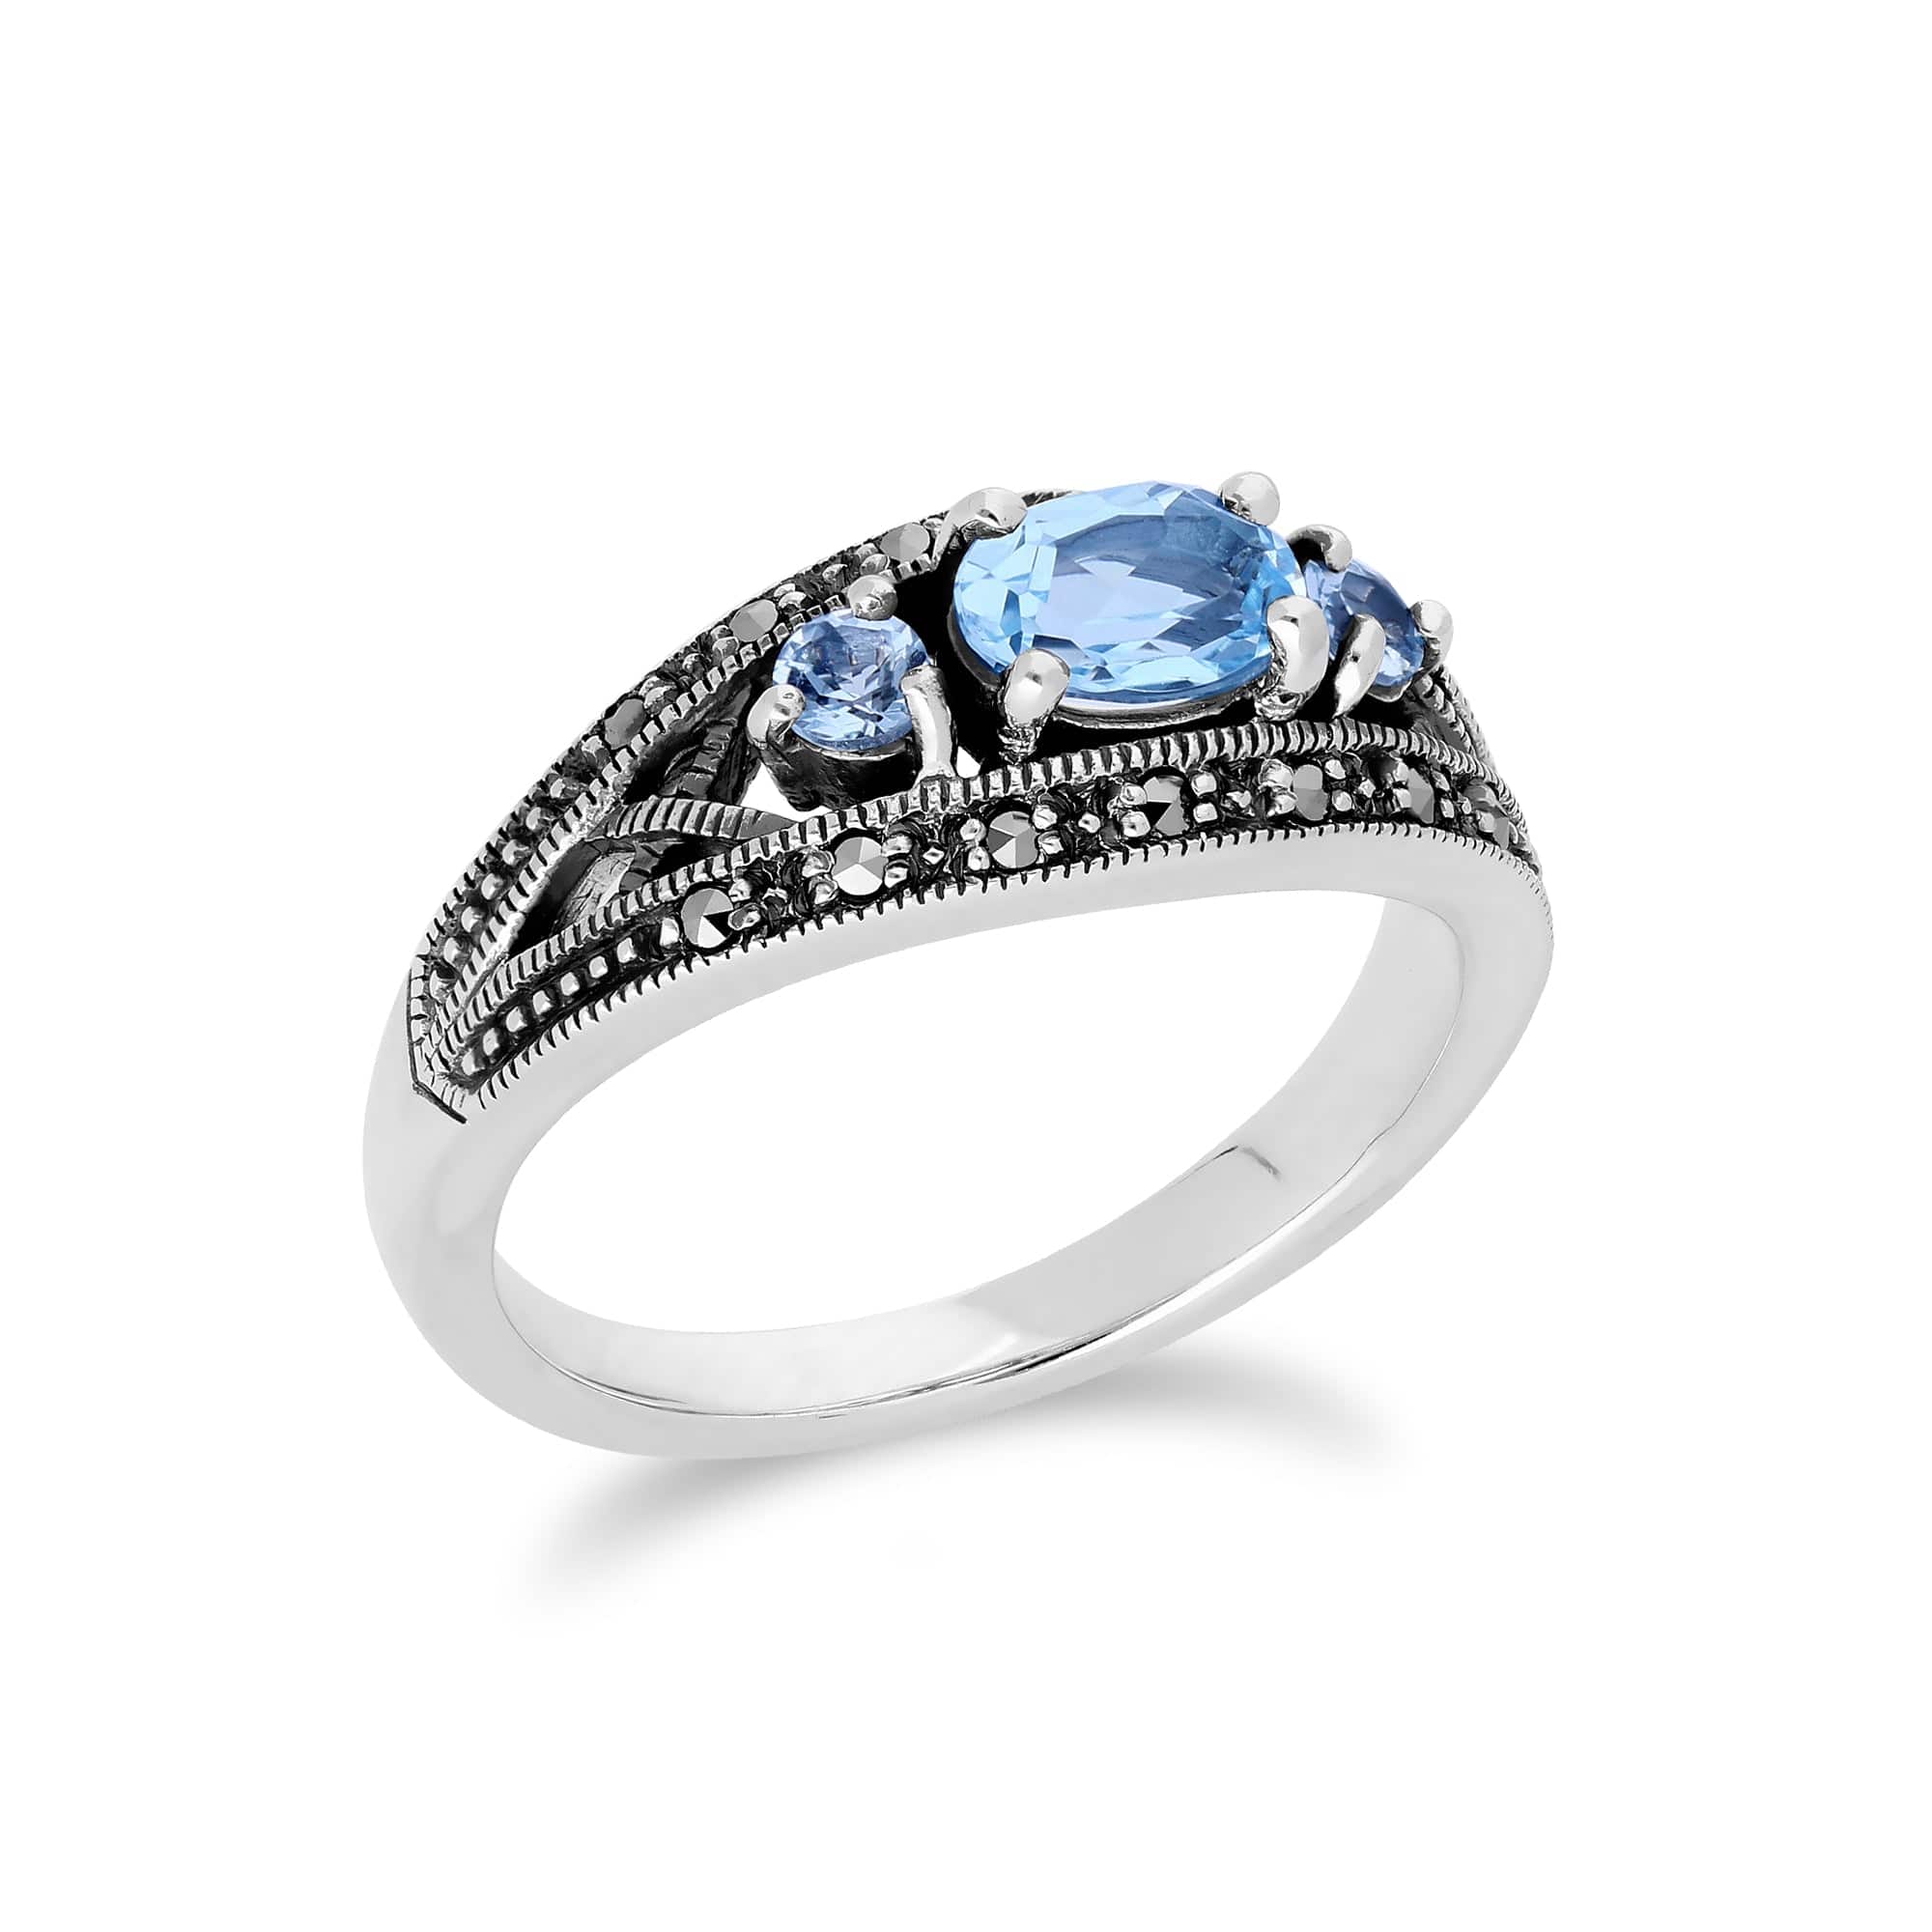 Art Deco Style Oval Blue Topaz & Marcasite Three Stone Ring in 925 Sterling Silver - Gemondo